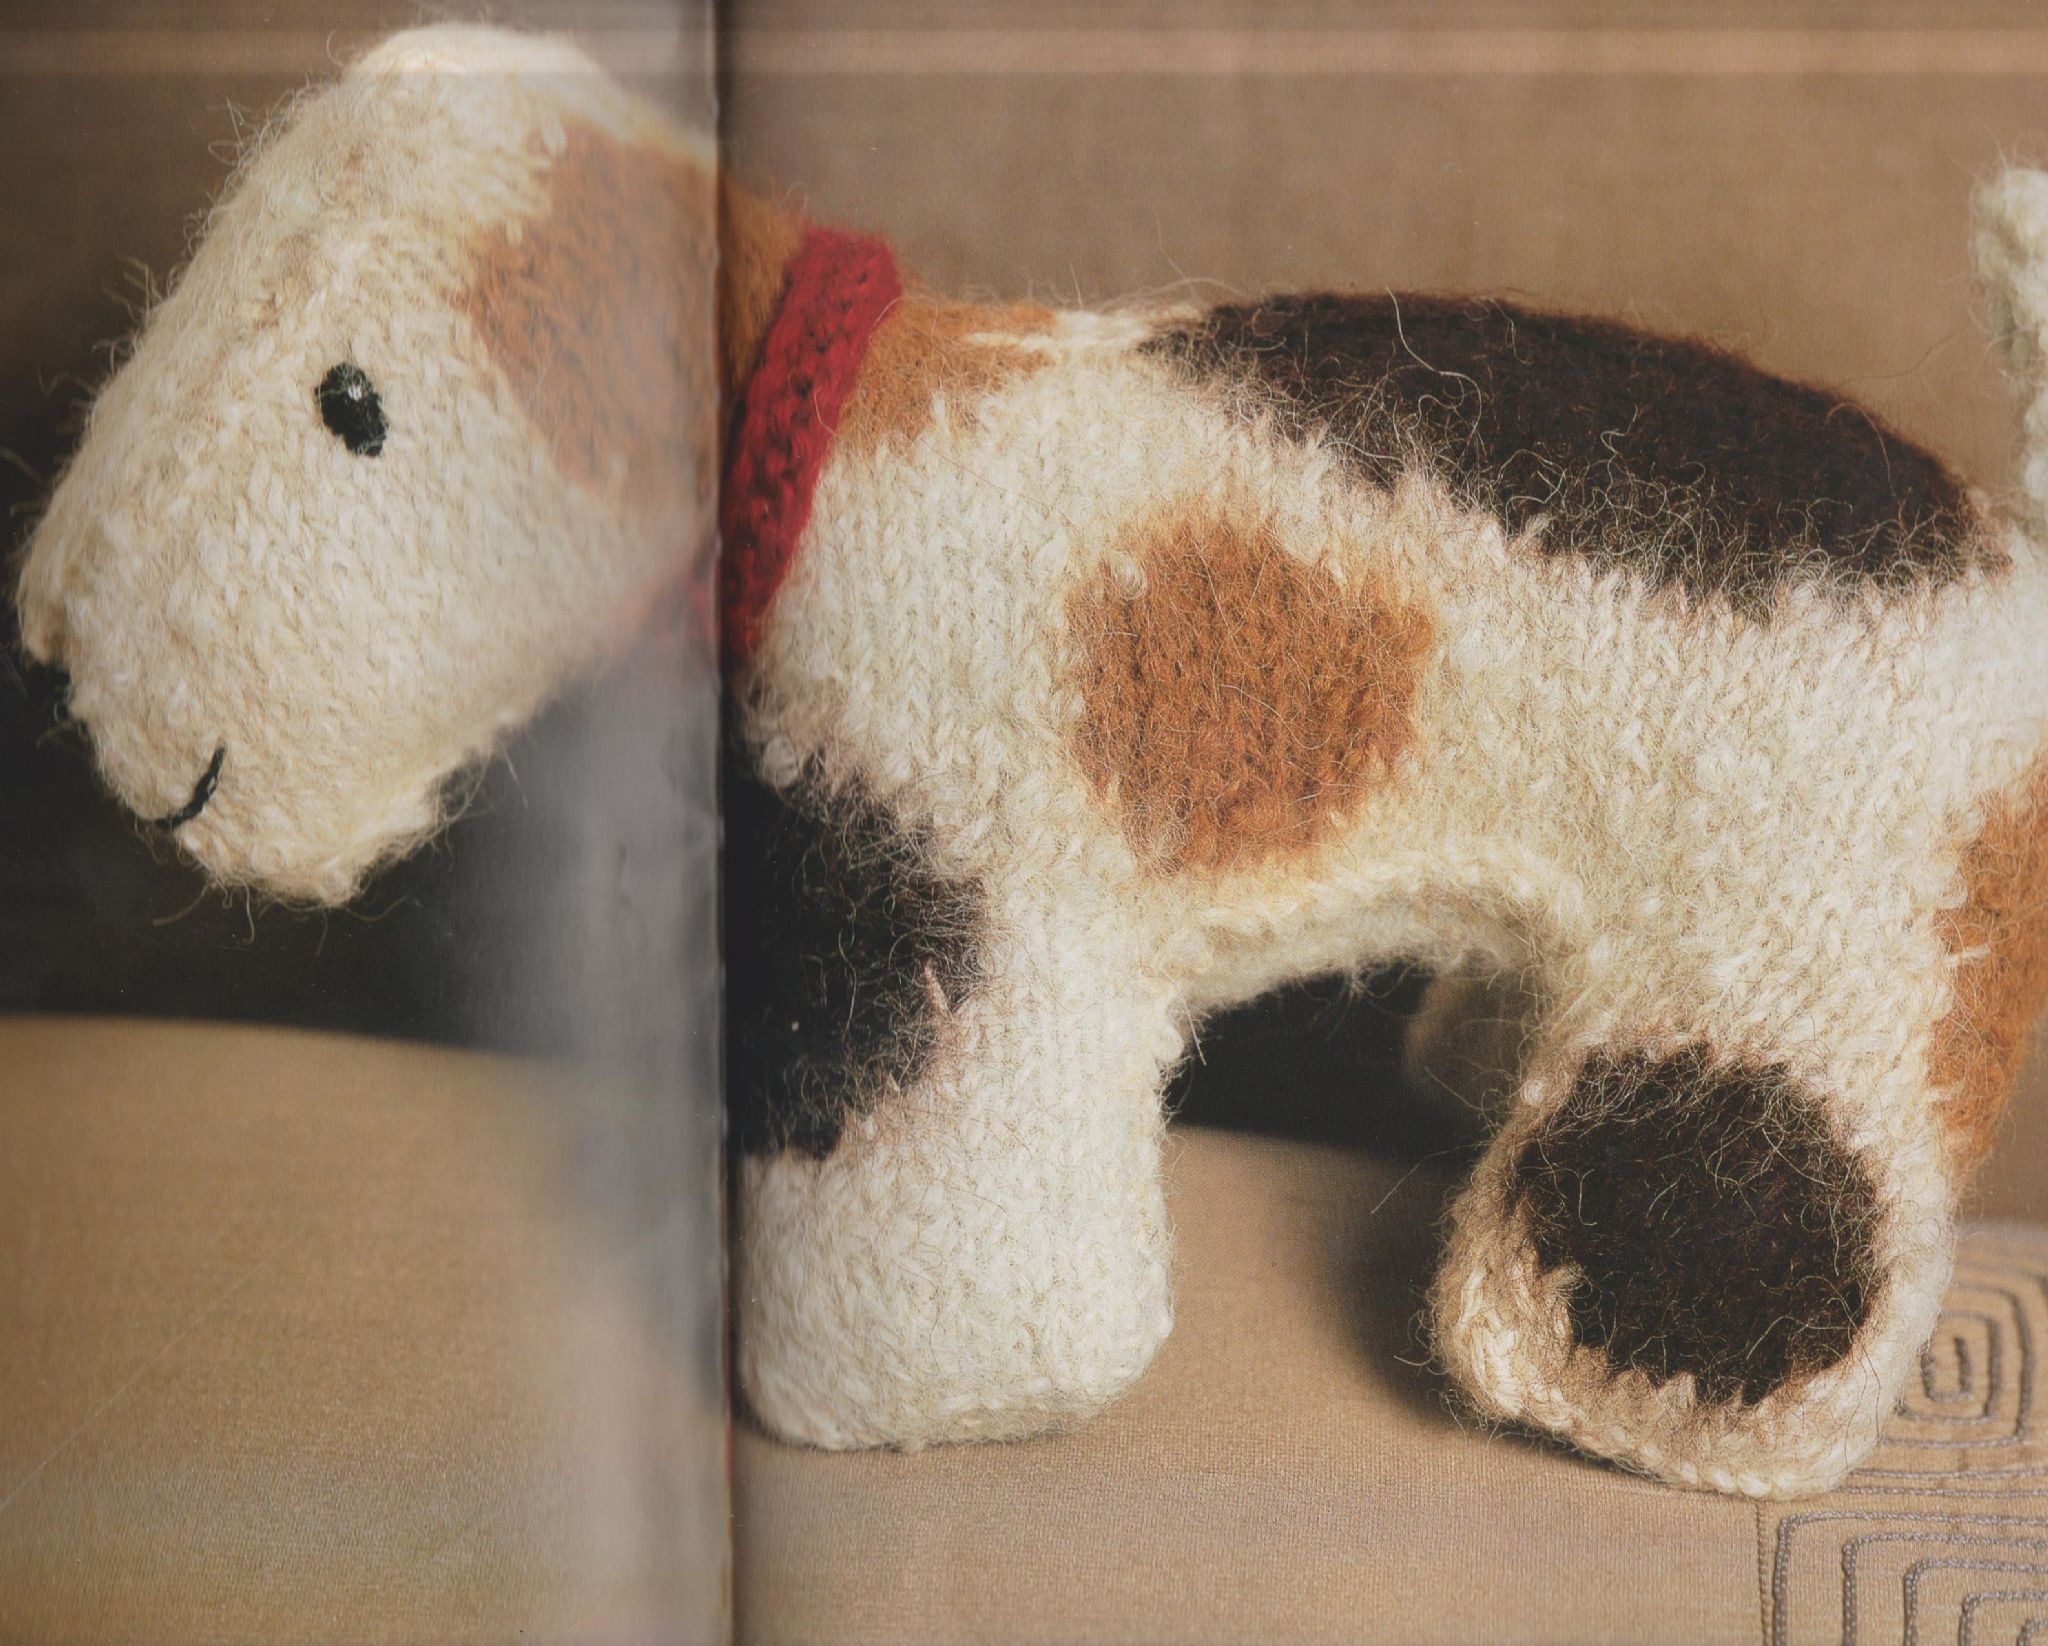 Animal Knitting Patterns Original Knitting Pattern To Make A Stuffed Soft Toy Elephant Or Animal 8 High Double Knitting